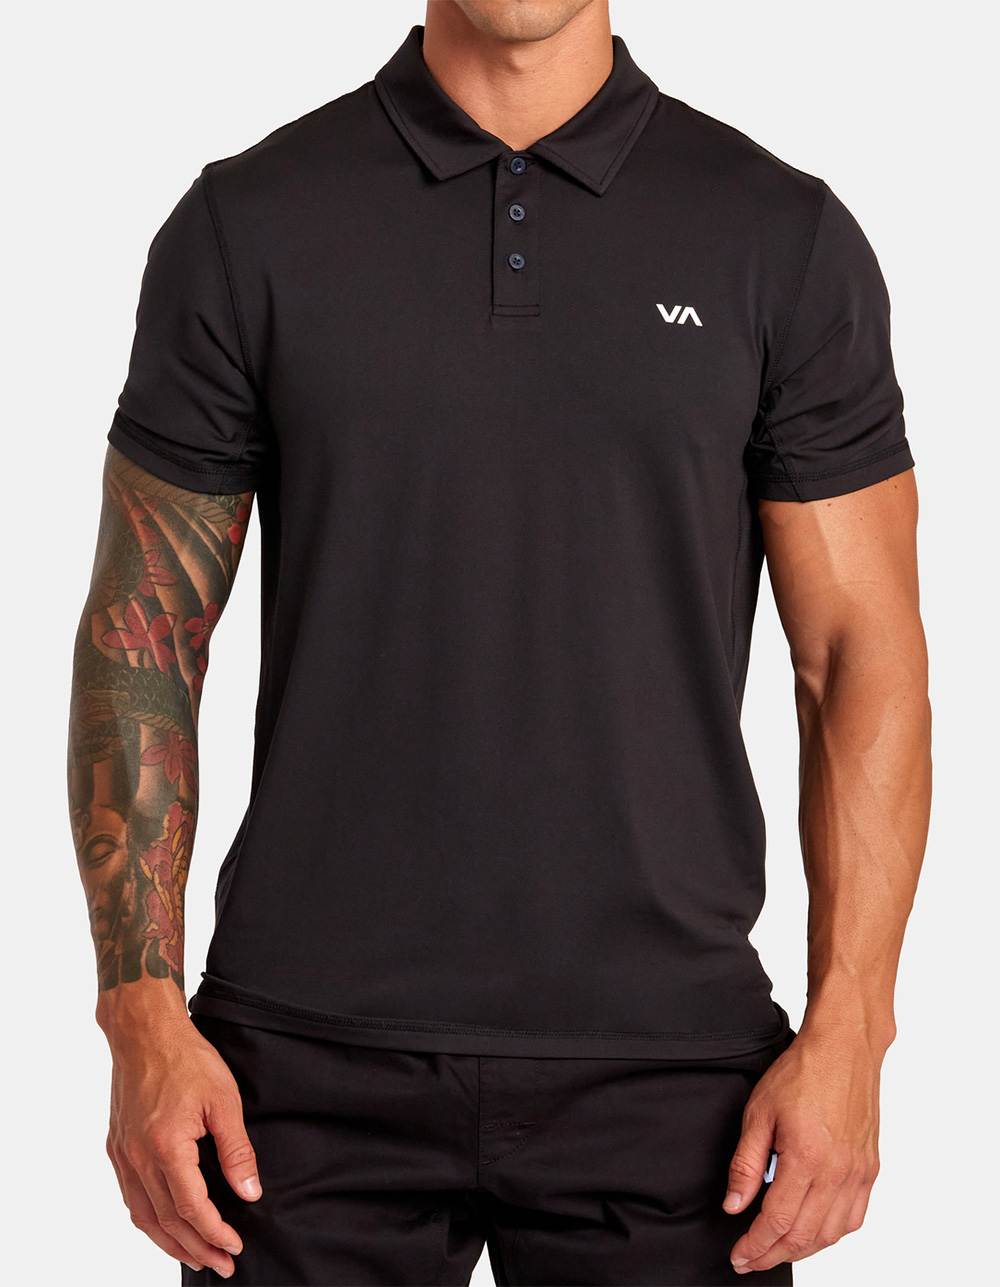 RVCA VA Sport Vent Mens Technical Polo Shirt - BLACK | Tillys